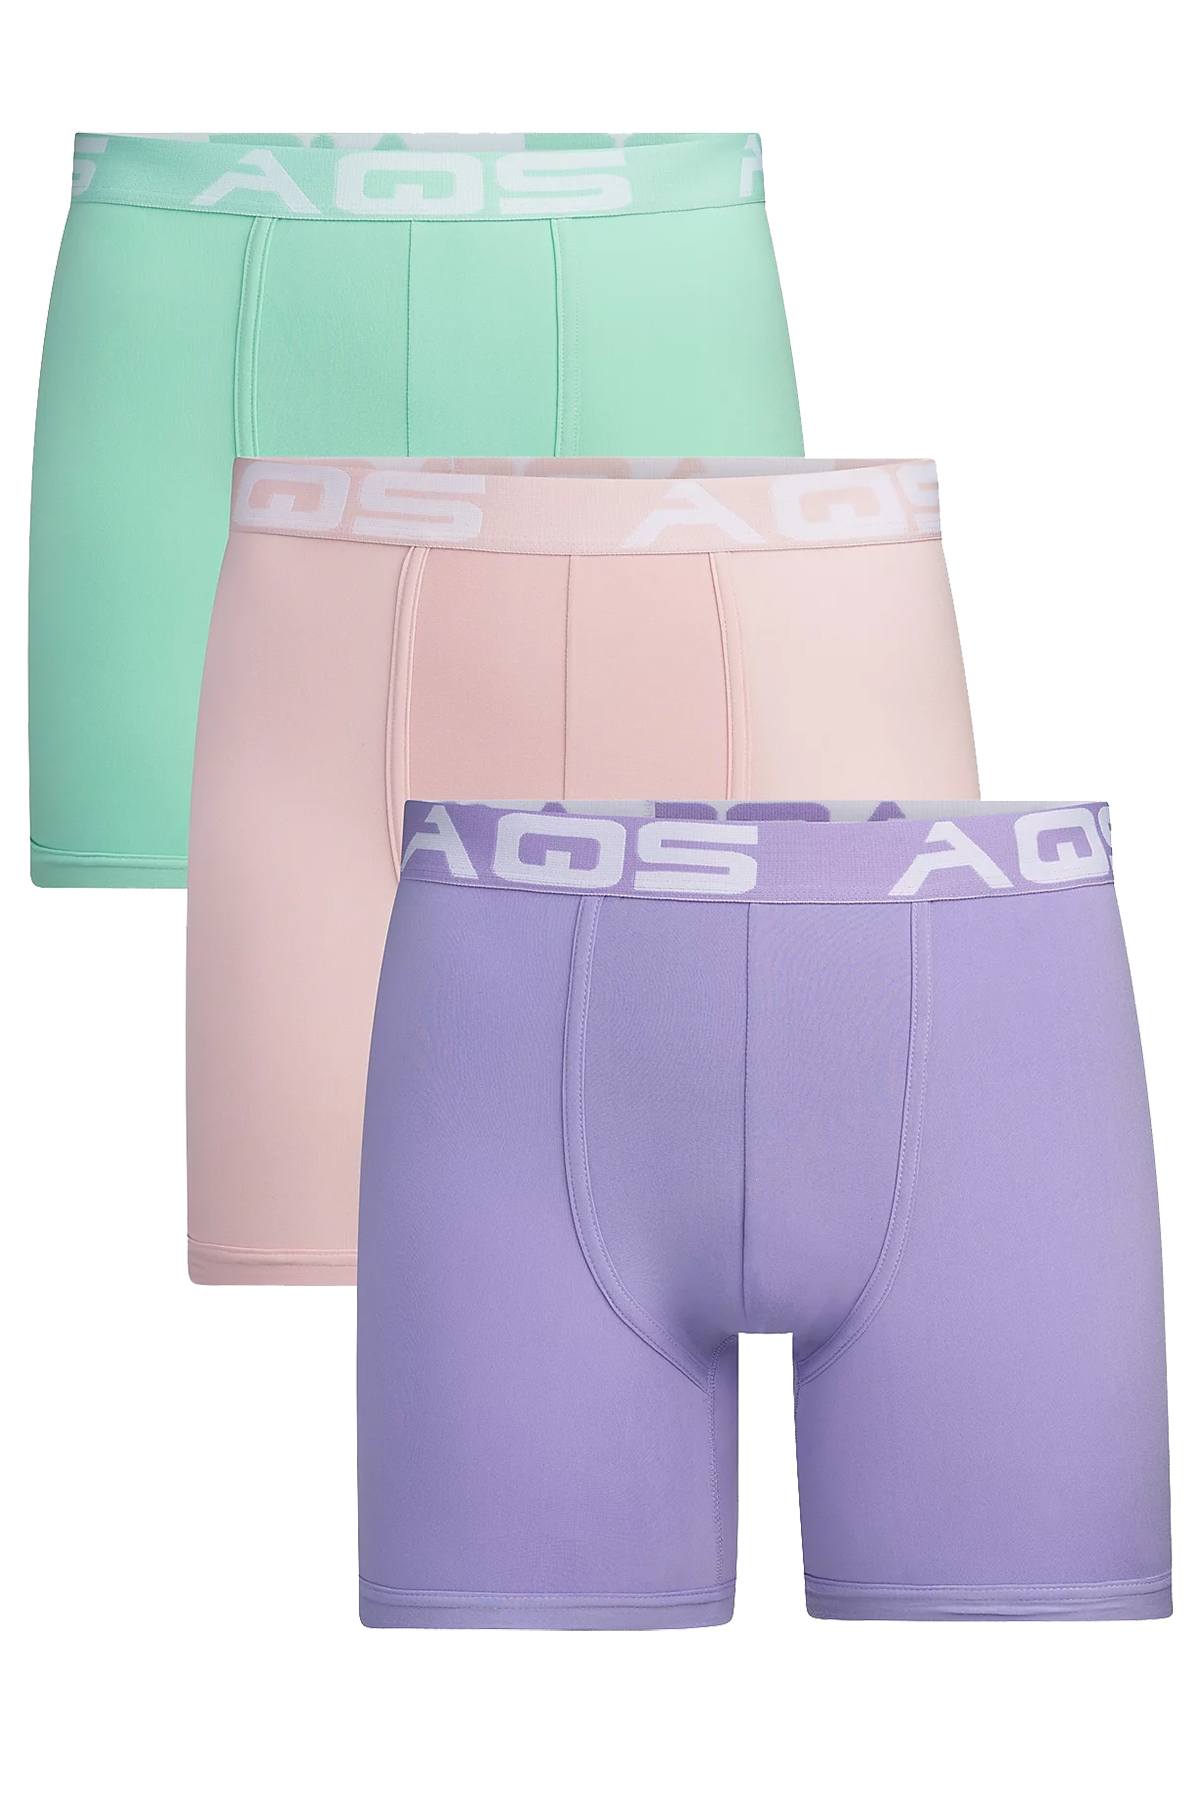 AQS Lavender/Pink/Mint Boxer Brief 3-Pack